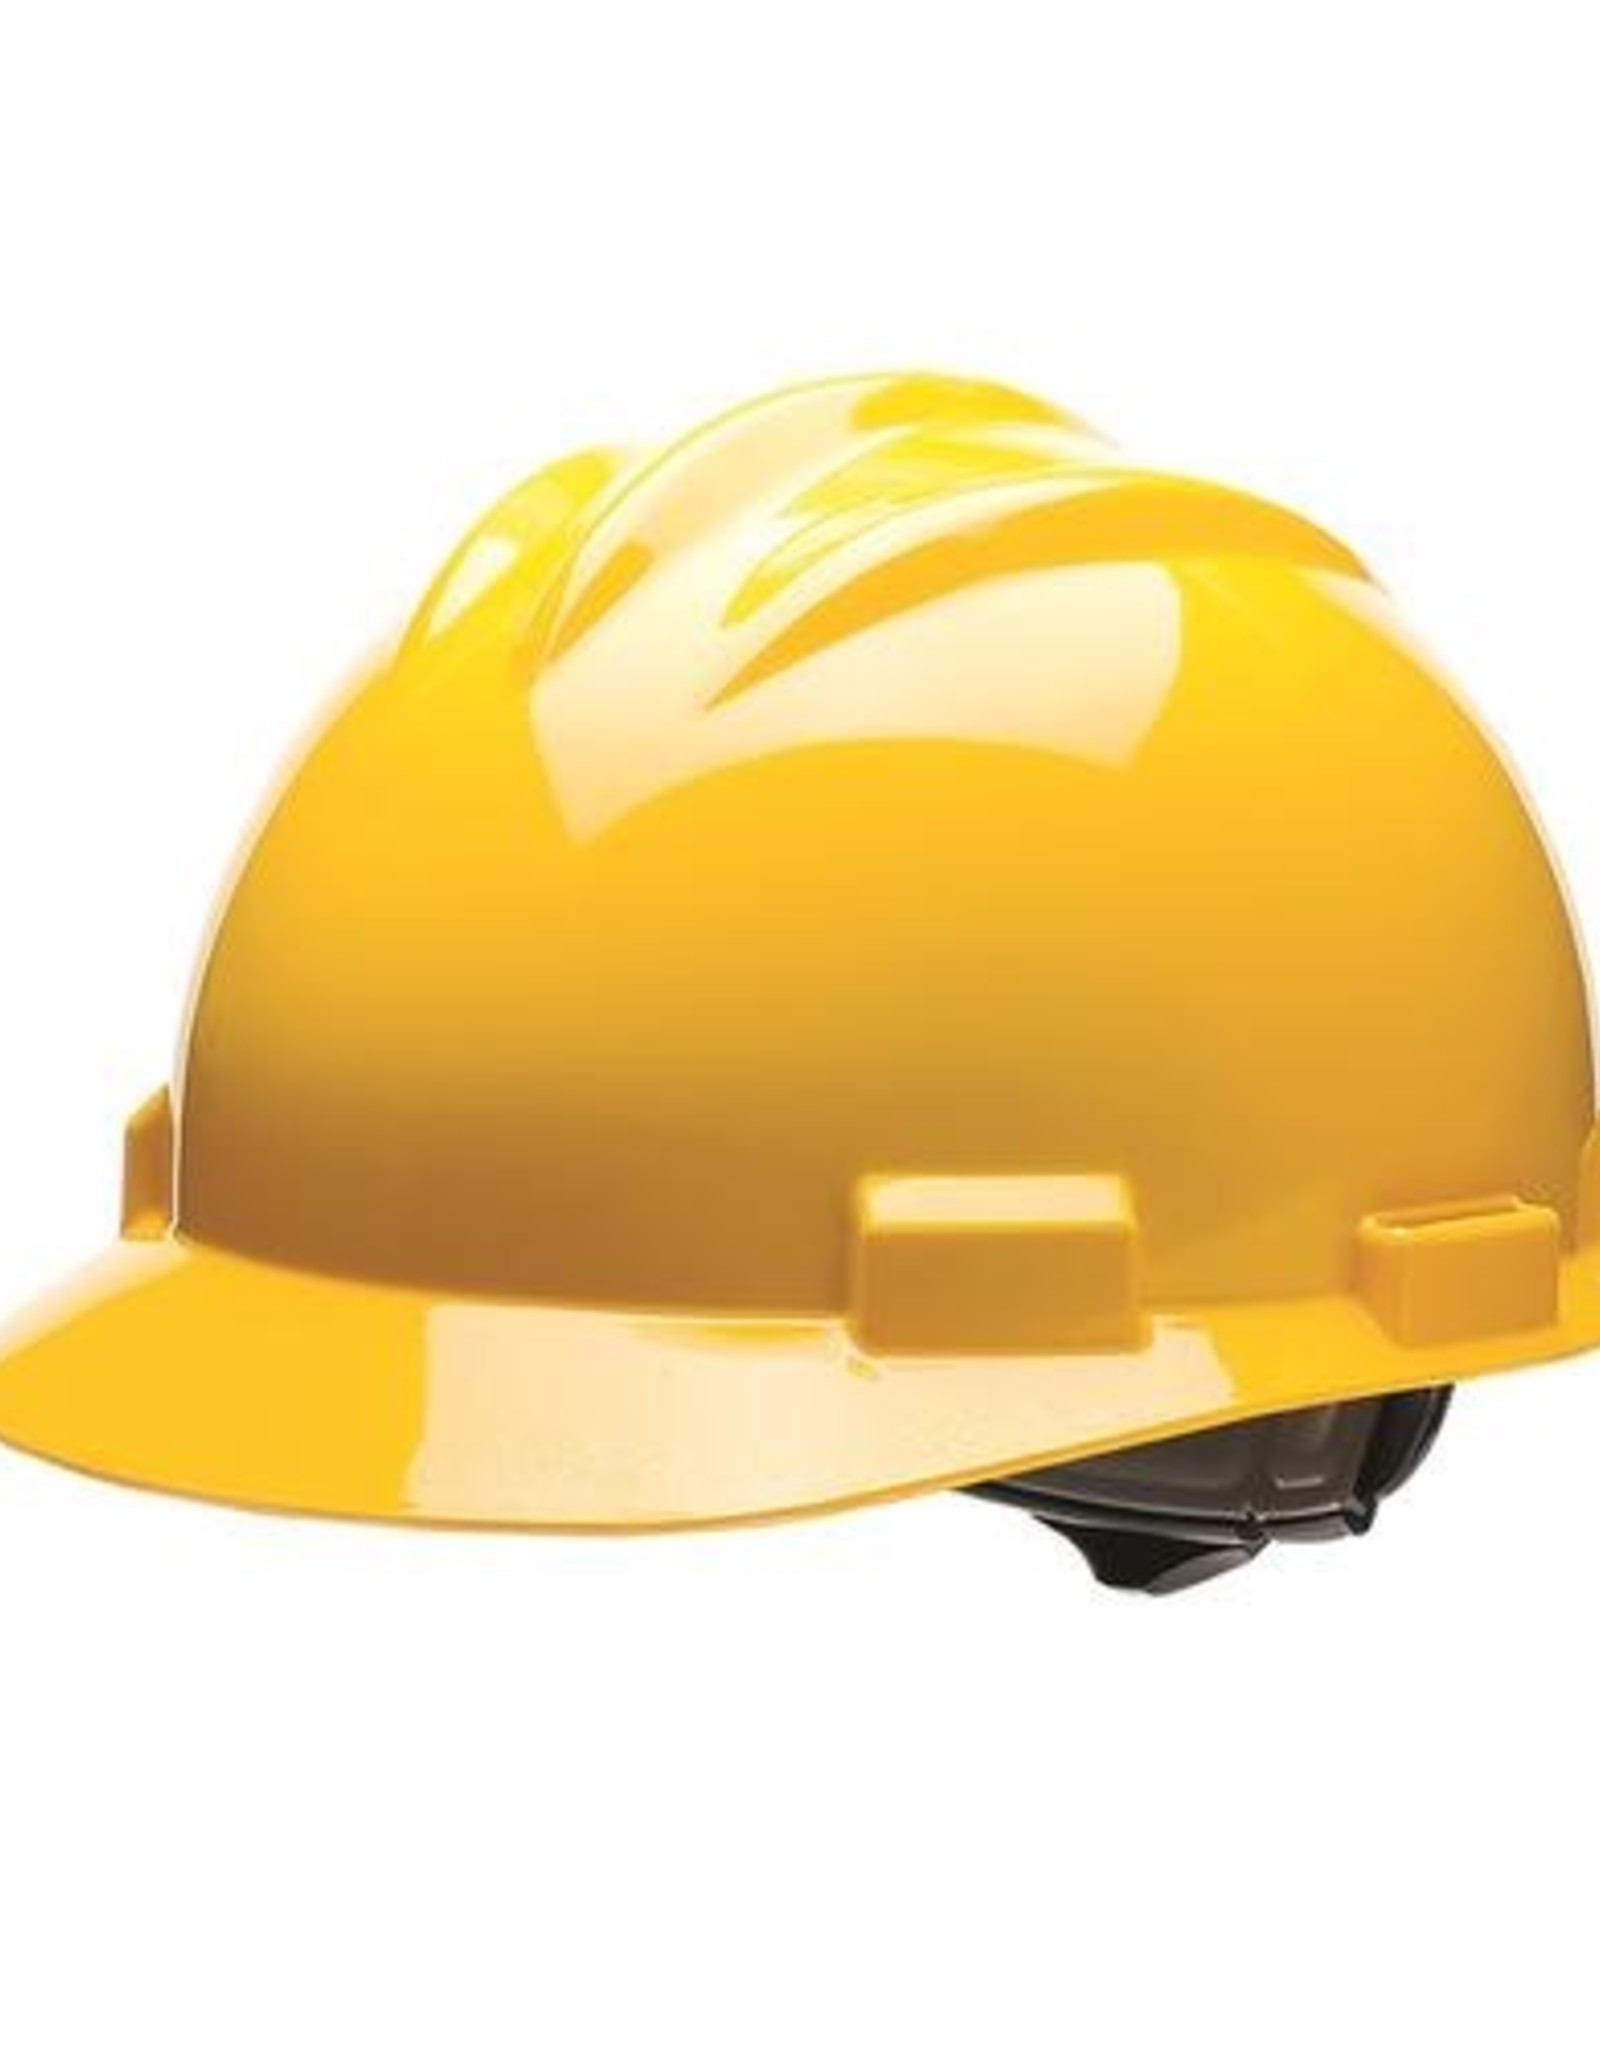 Gateway Safety Standard Yellow Shell Ratchet Adjustment Suspension Hard Hat  - 10 Pack